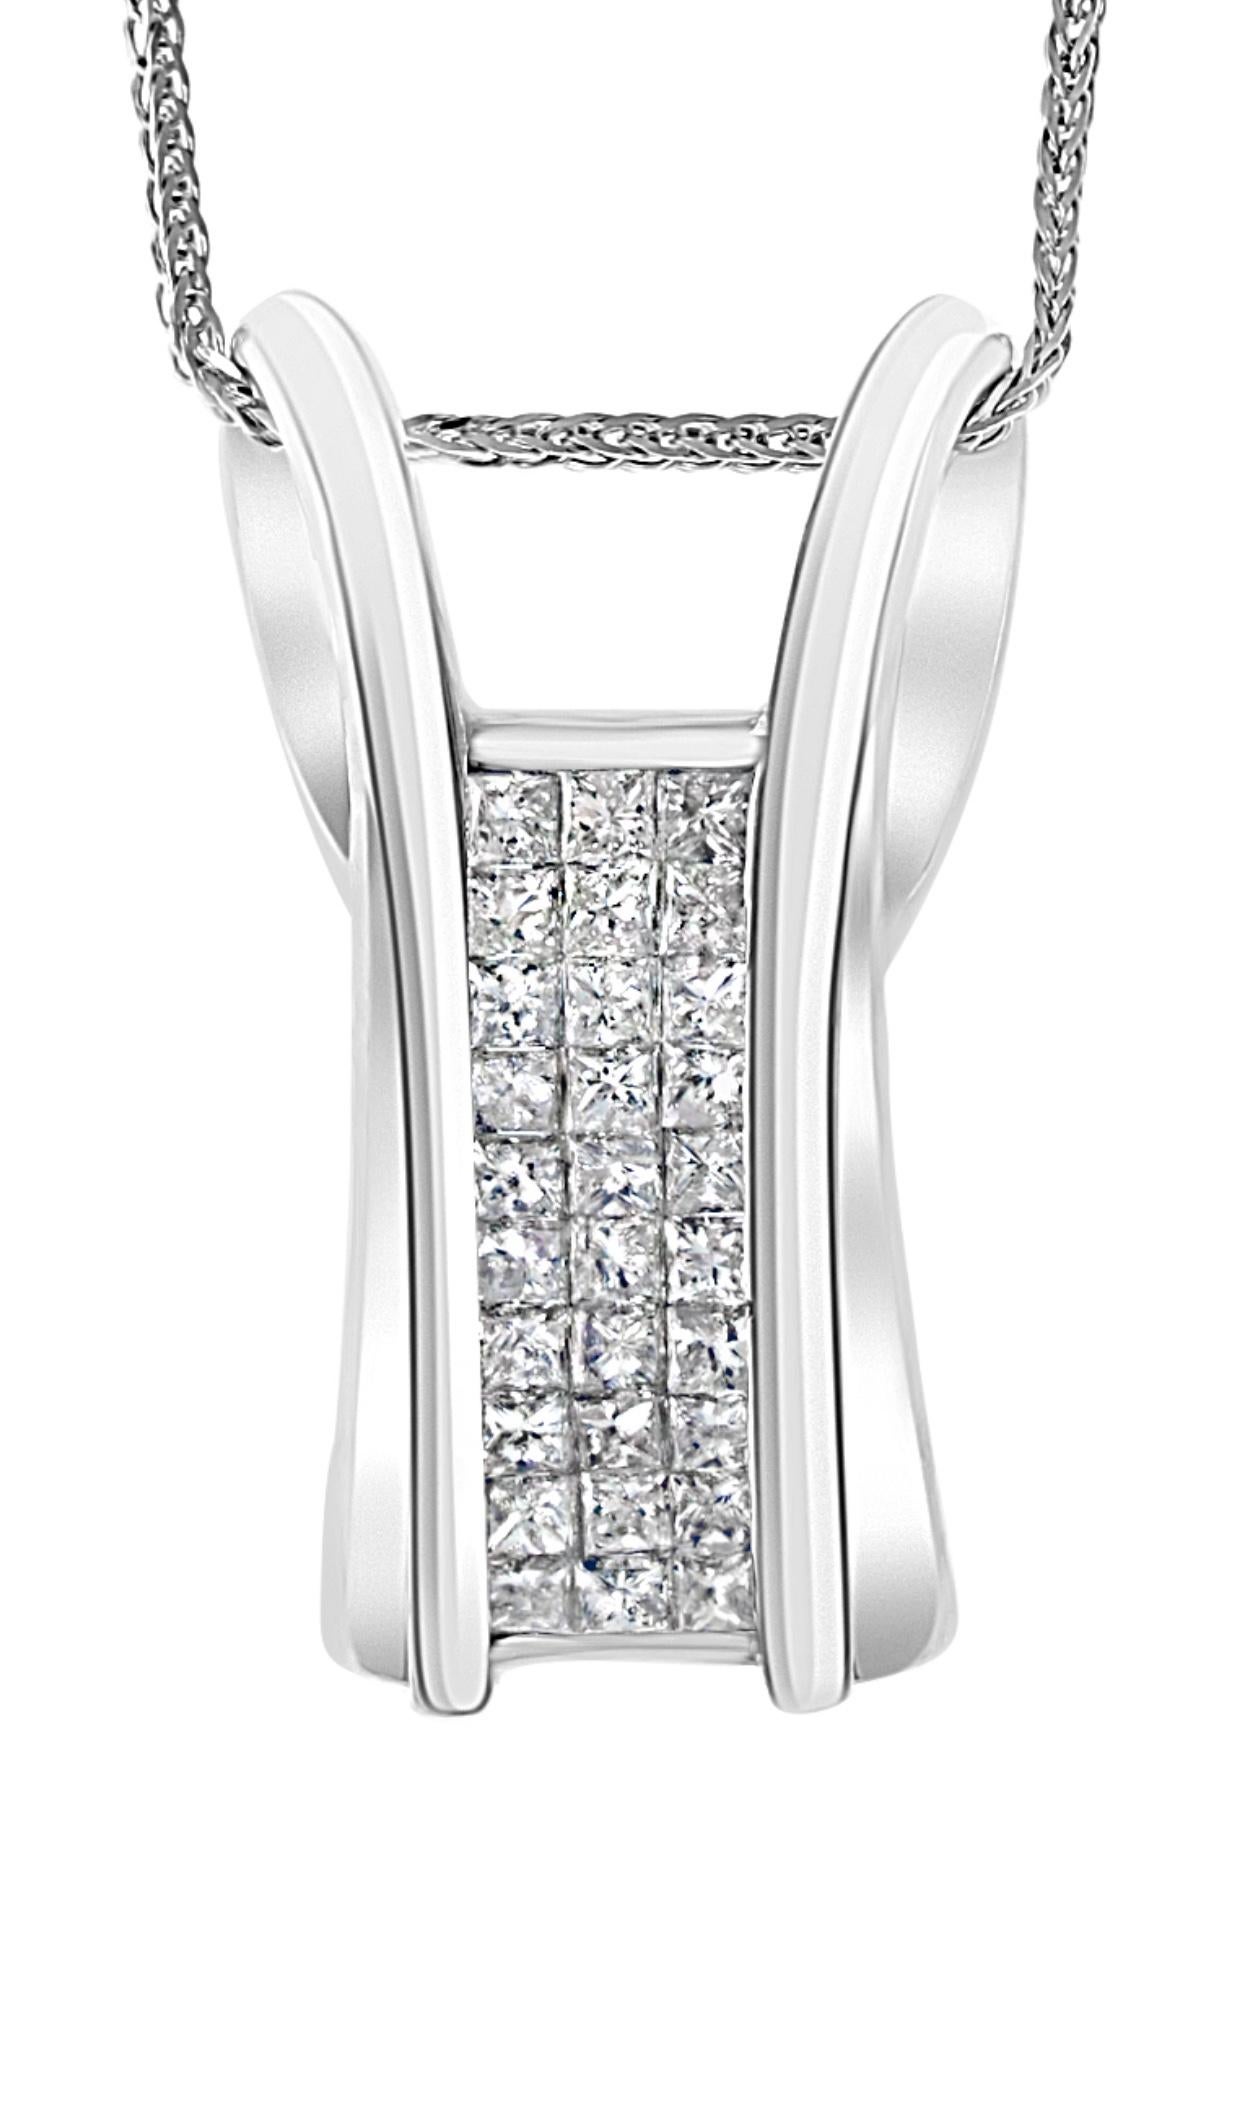 2.2 Carat Princess Cut Diamond Pendant/ Necklace 14 Karat White Gold with Chain 2